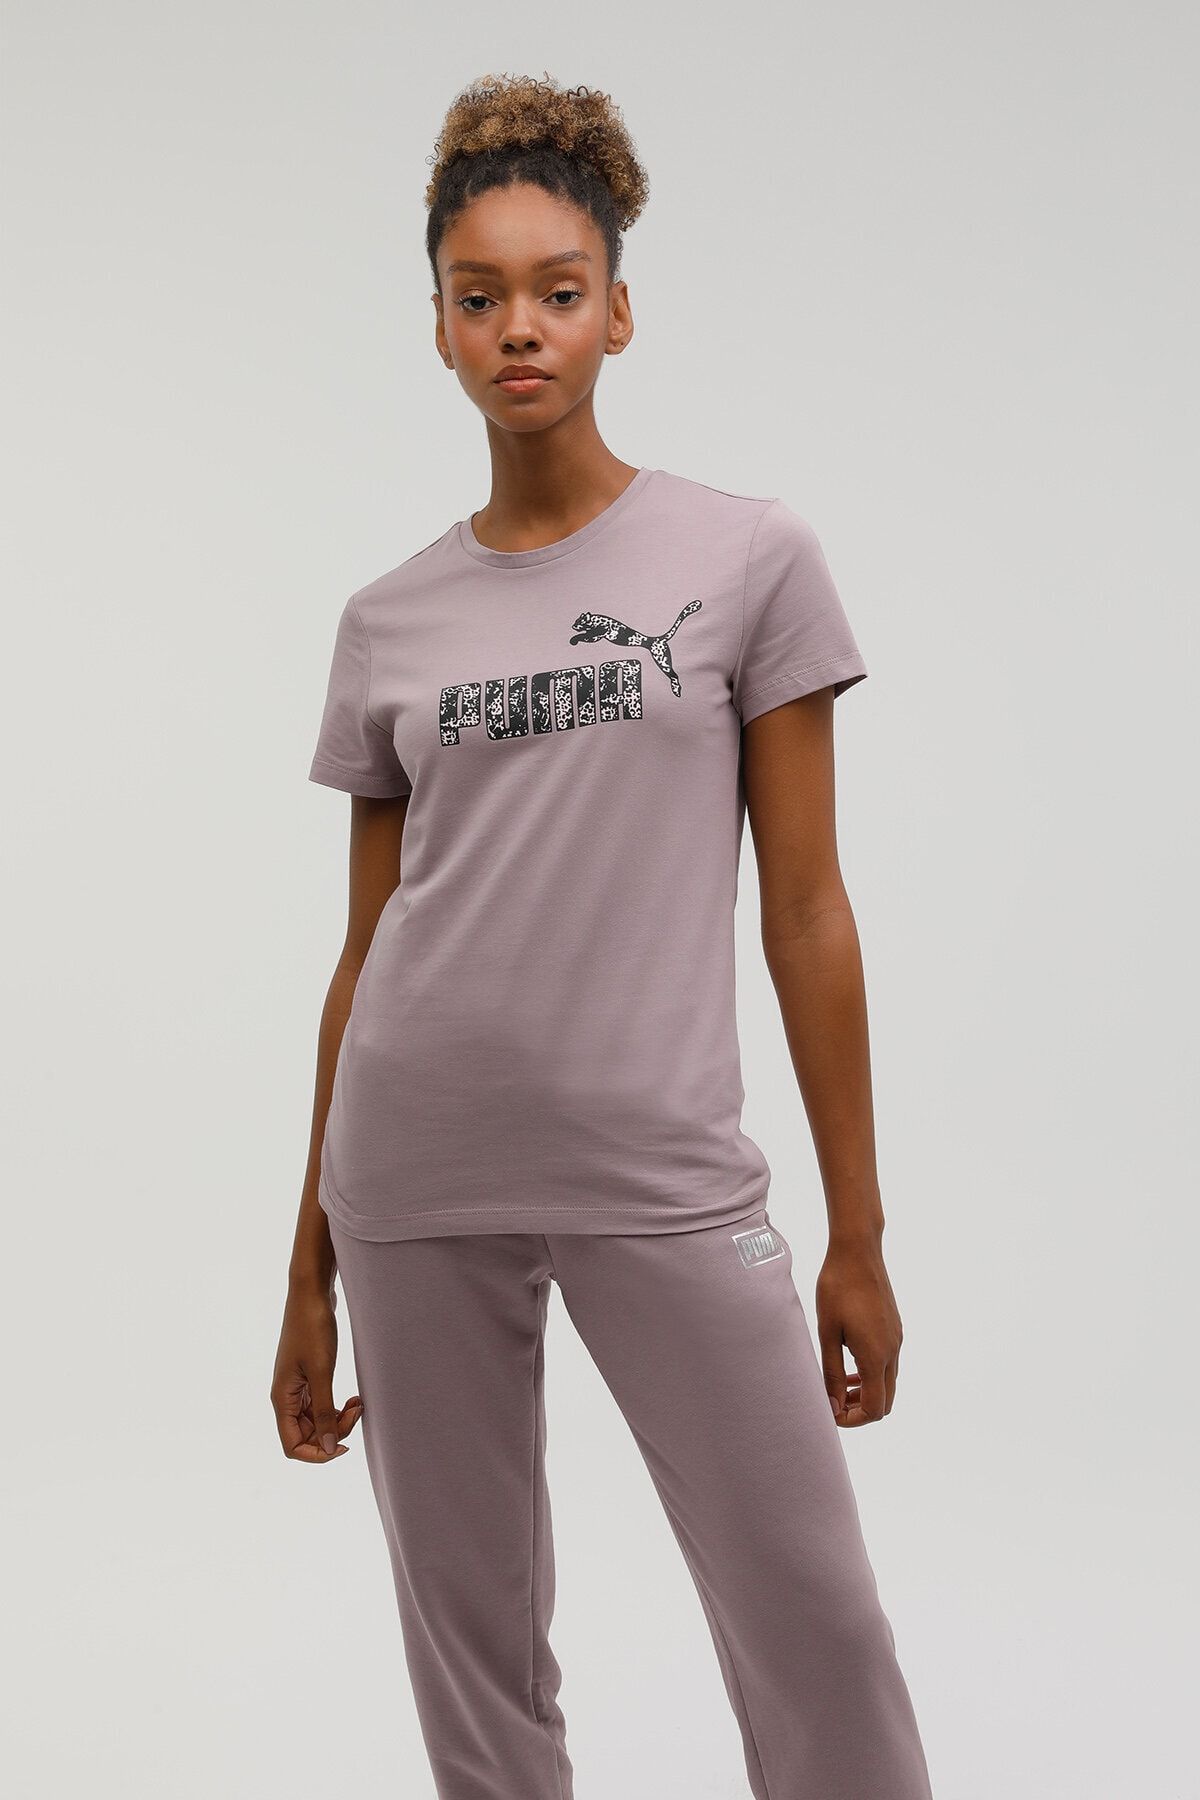 Puma Bppo-000182 Blank Base - Yeşil Kadın Kısa Kol T-shirt